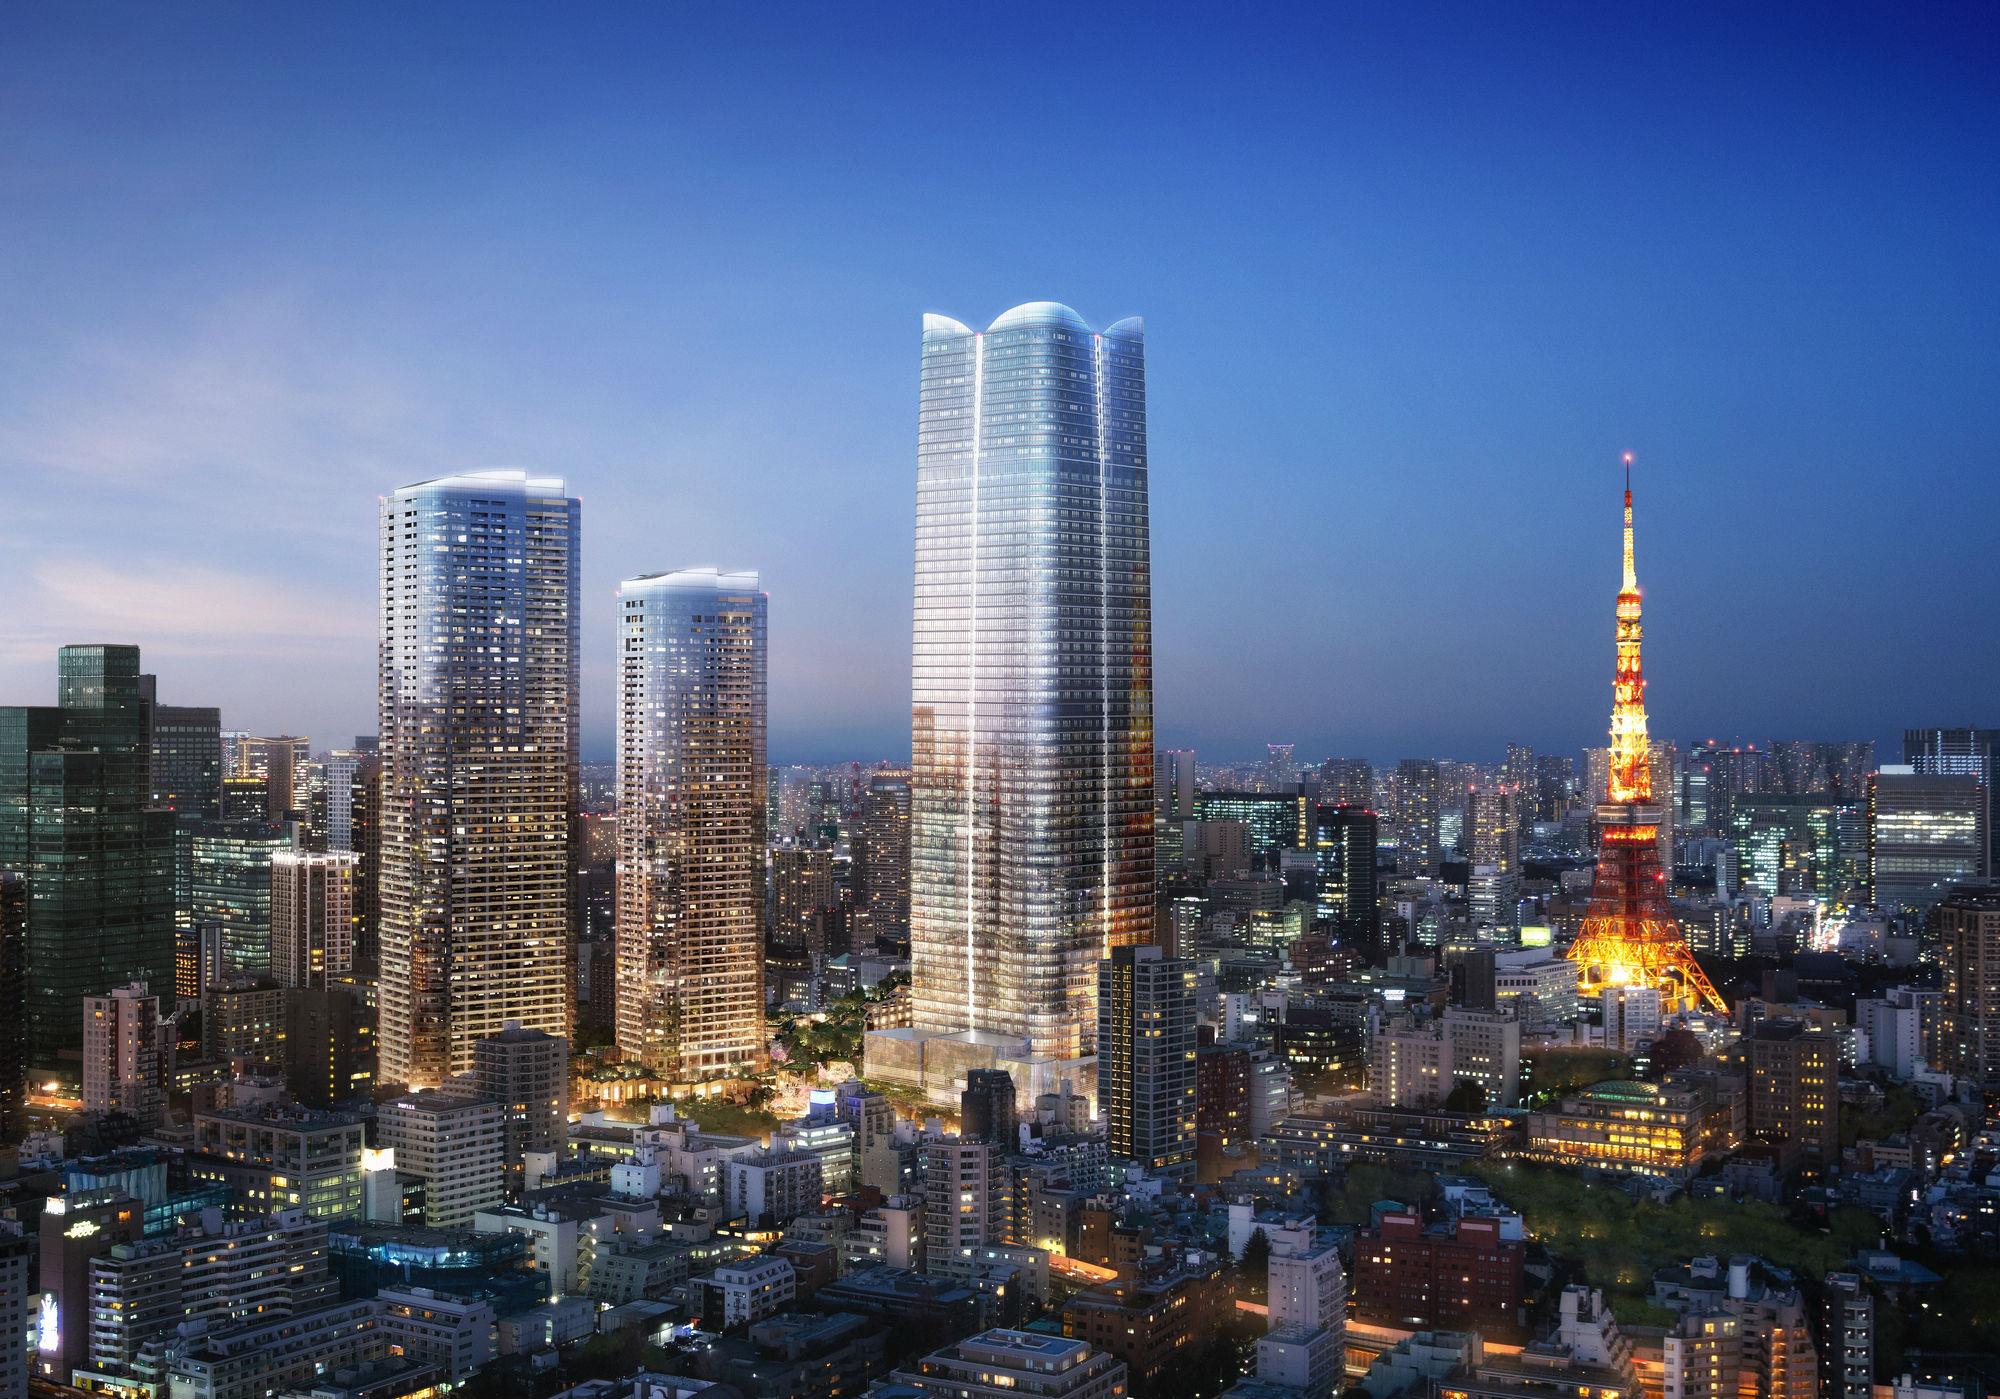 Pelli Clarke Pelli为东京市中心的重建设计了3座塔楼